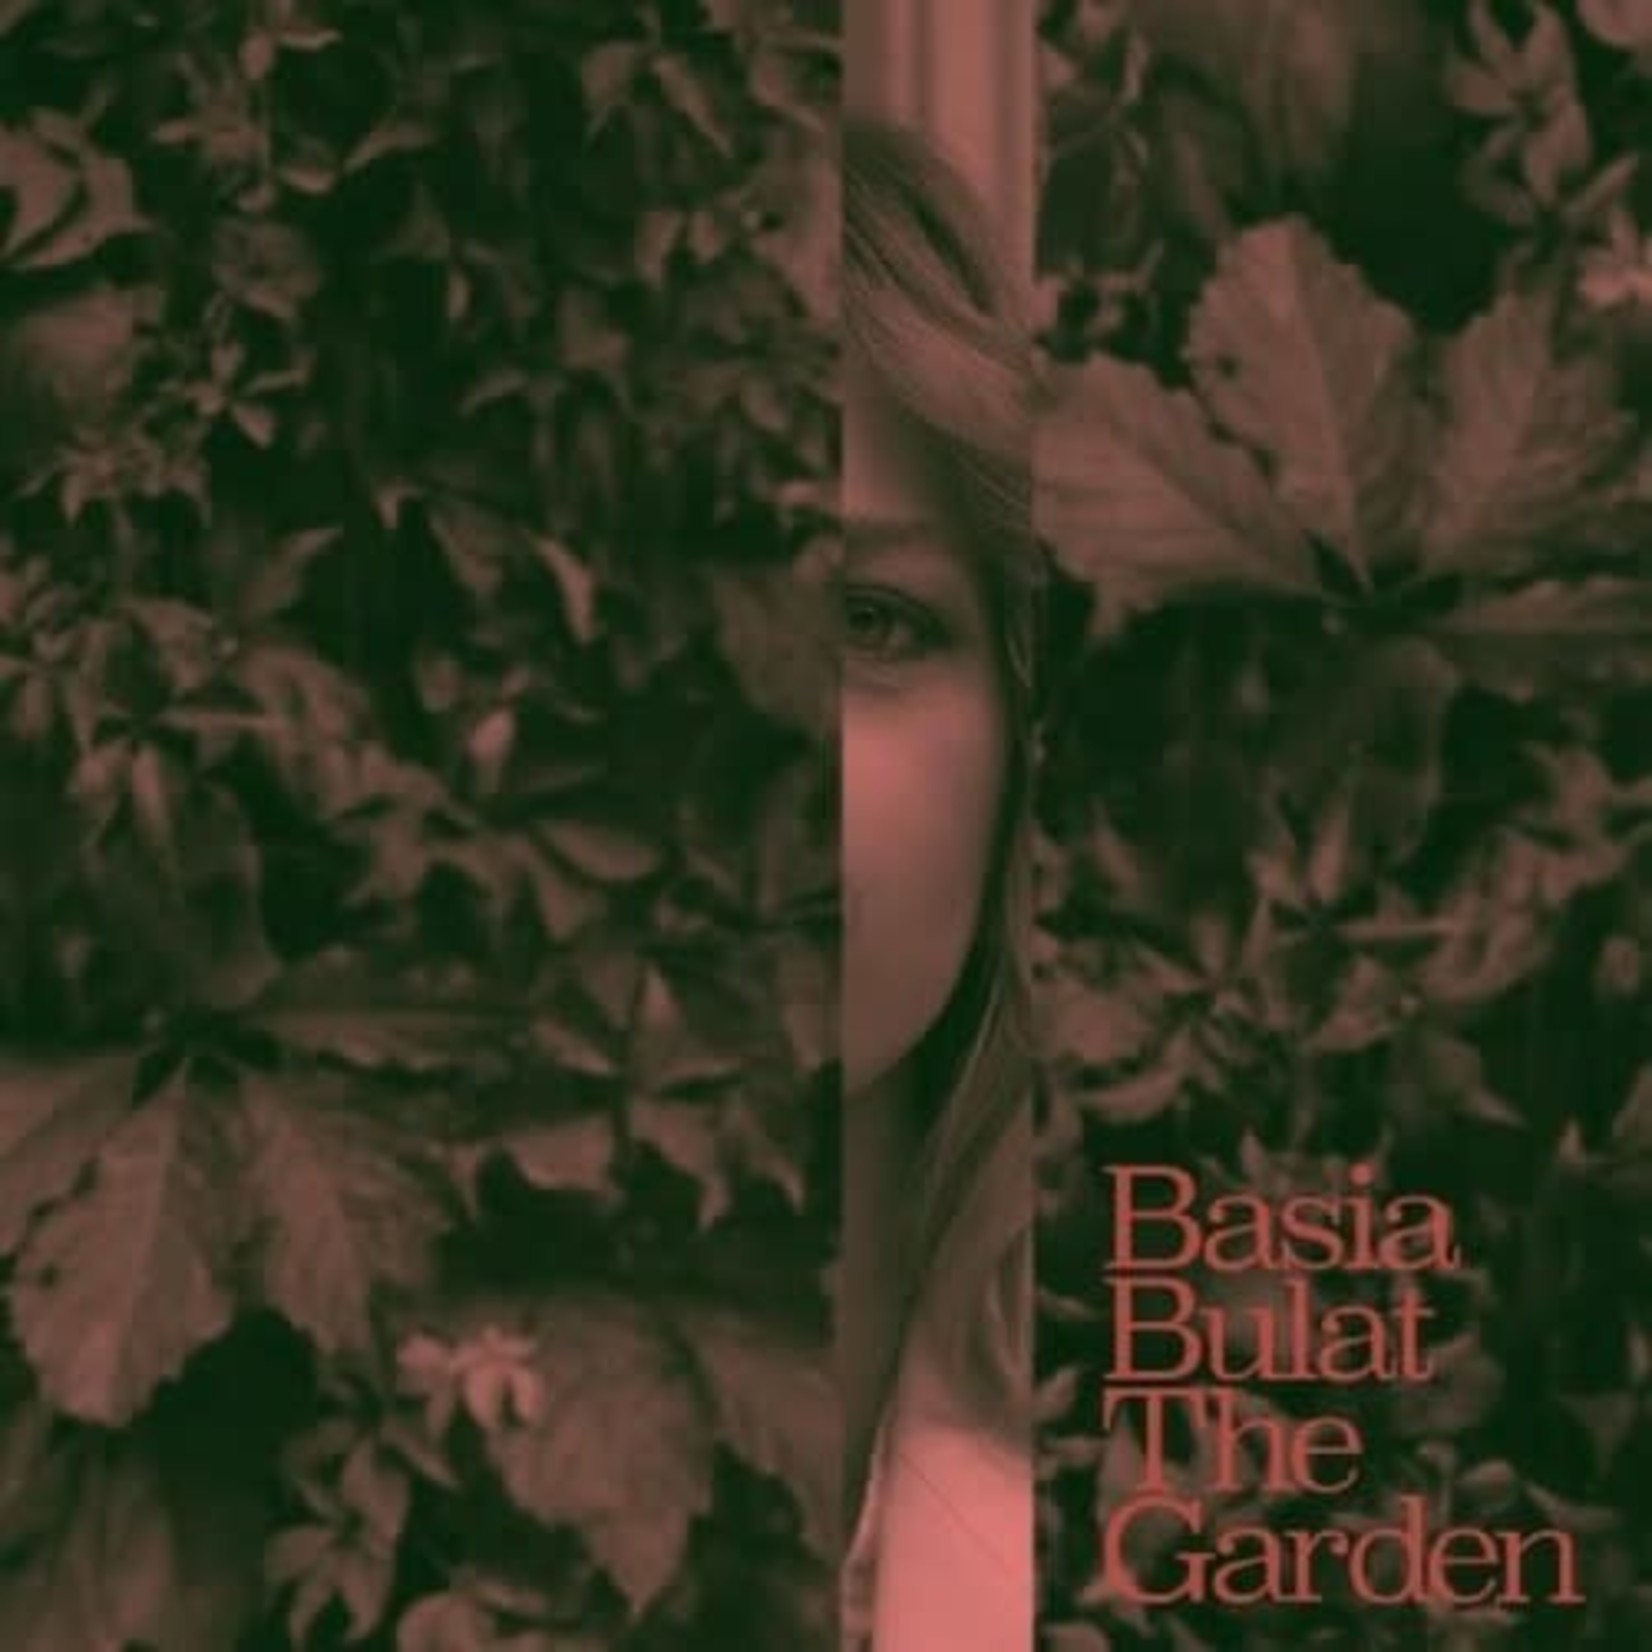 Basia Bulat - The Garden [2LP]